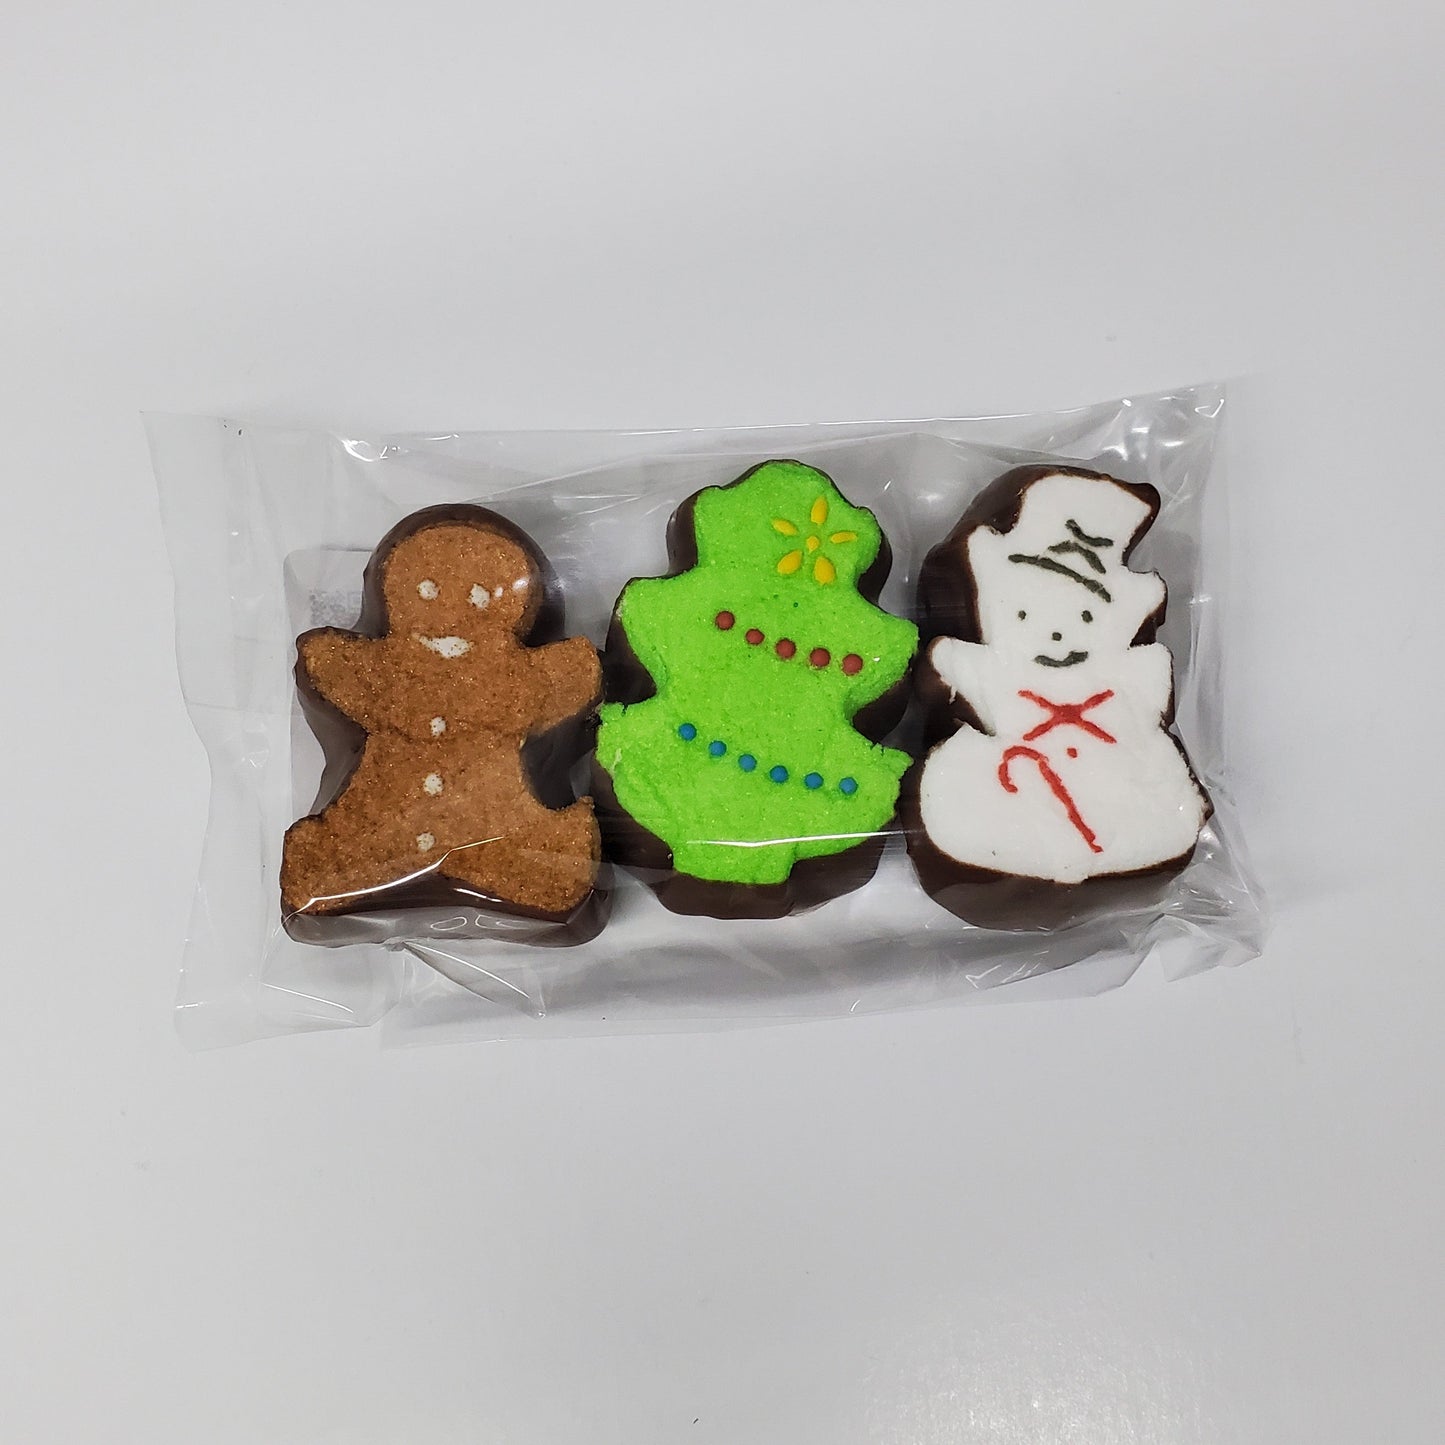 Gingerbread man, Christmas Tree, Snowman shaped Peeps dipped in milk chocolate